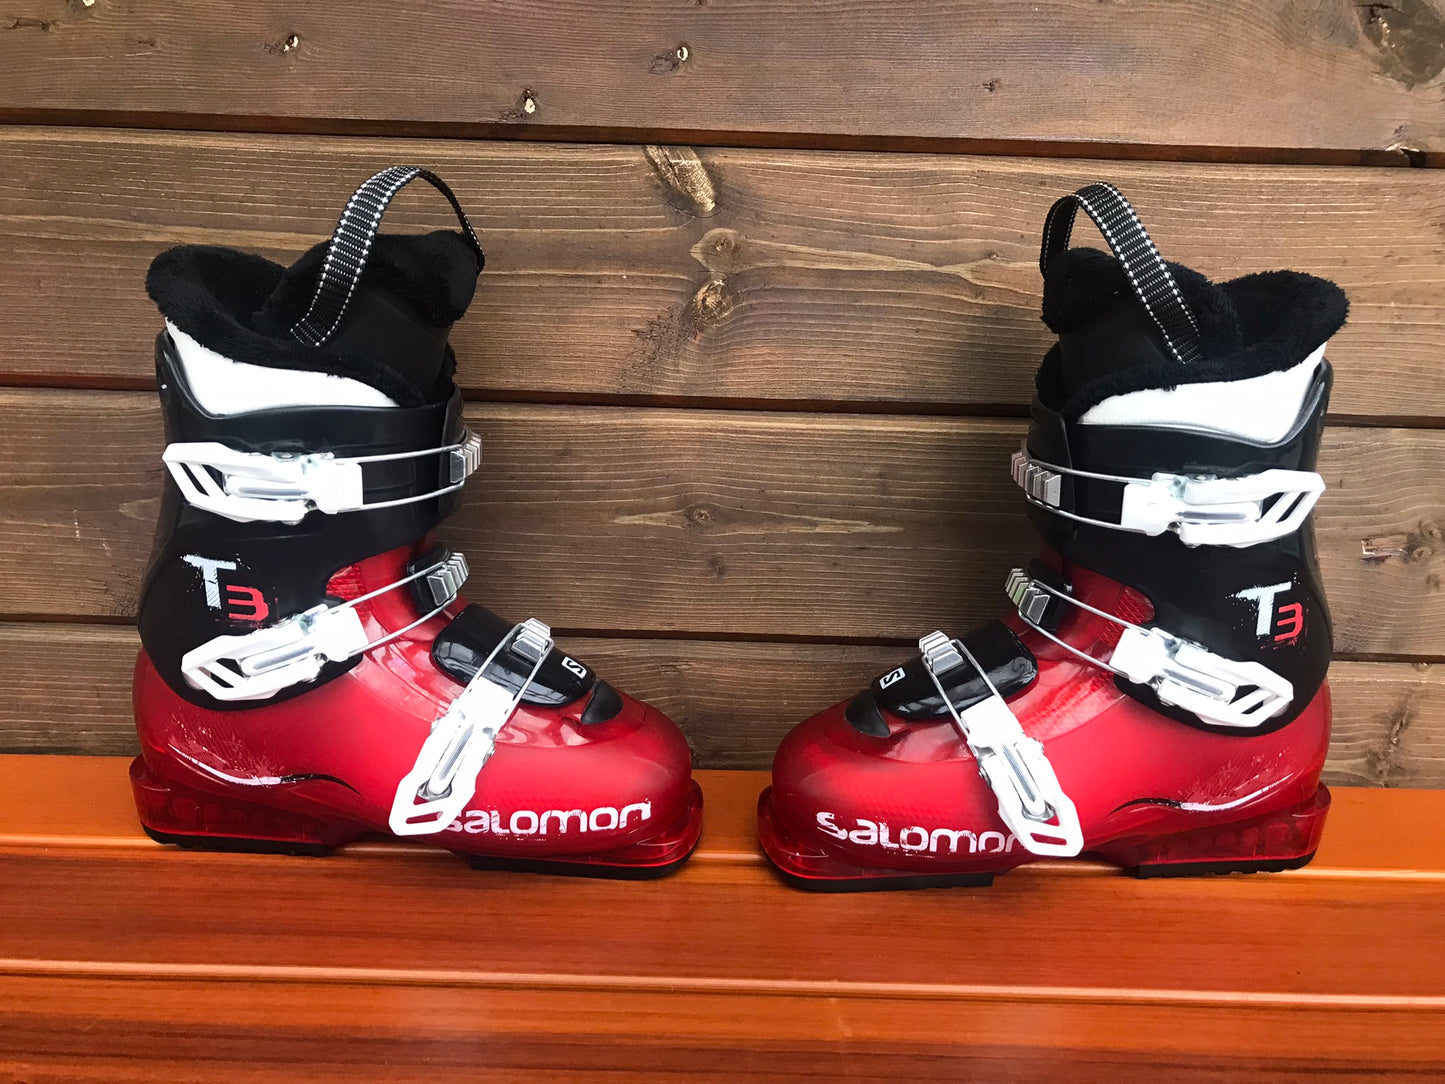 Ski Boots Mondo Size 23.0 Child Size 5-6 Size 13  276 mm Salomon Black Red White New Demo Model